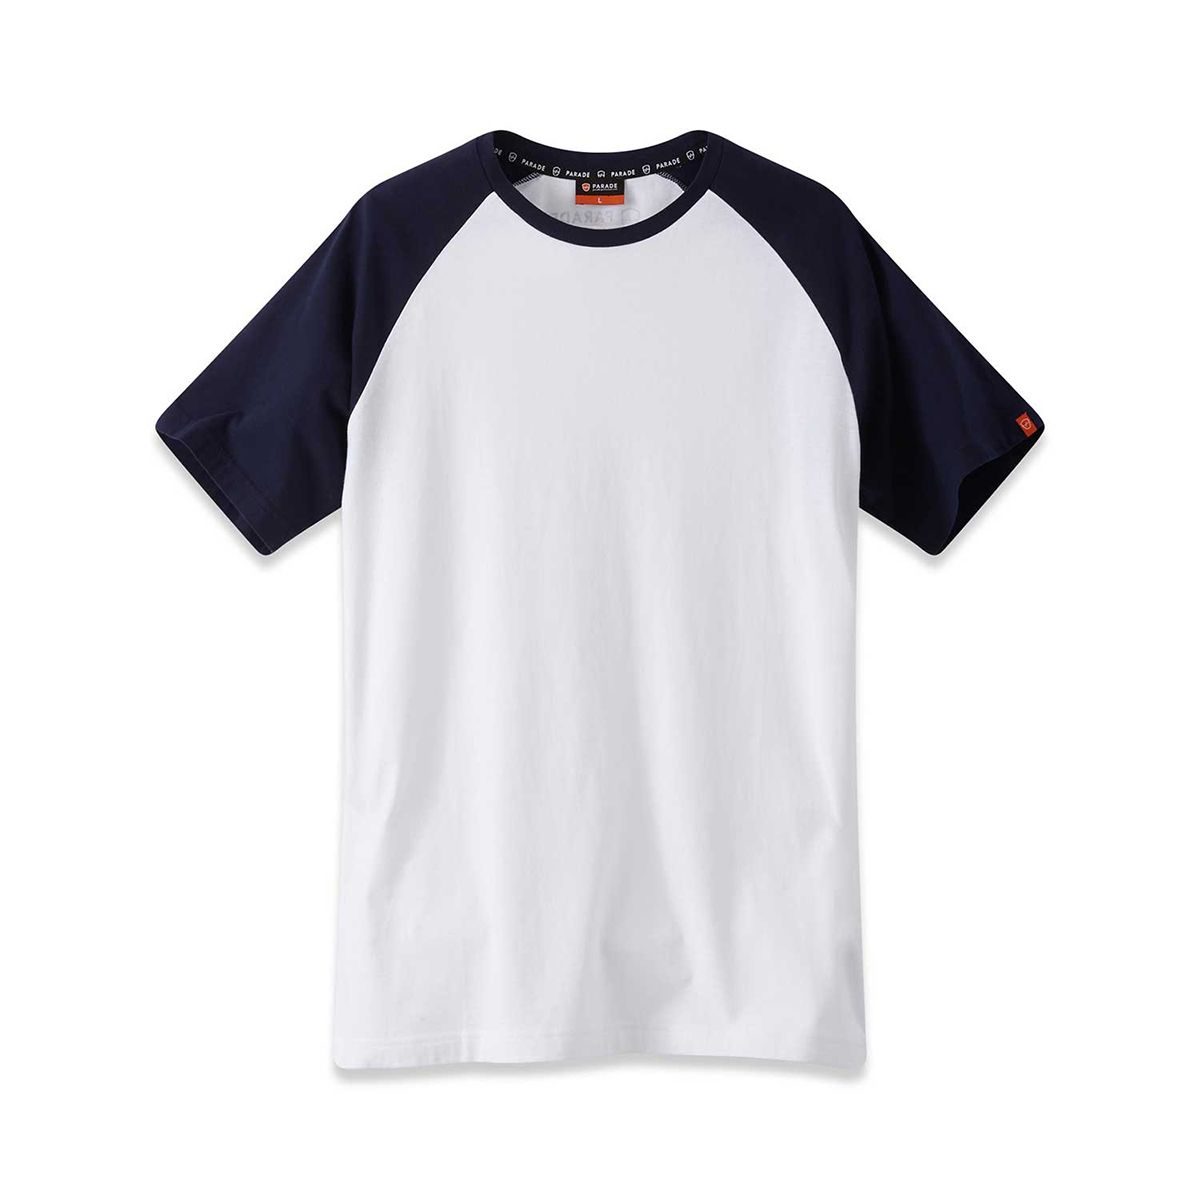 Parade White Cotton Short Sleeve T-Shirt, UK- XL, EUR- XL